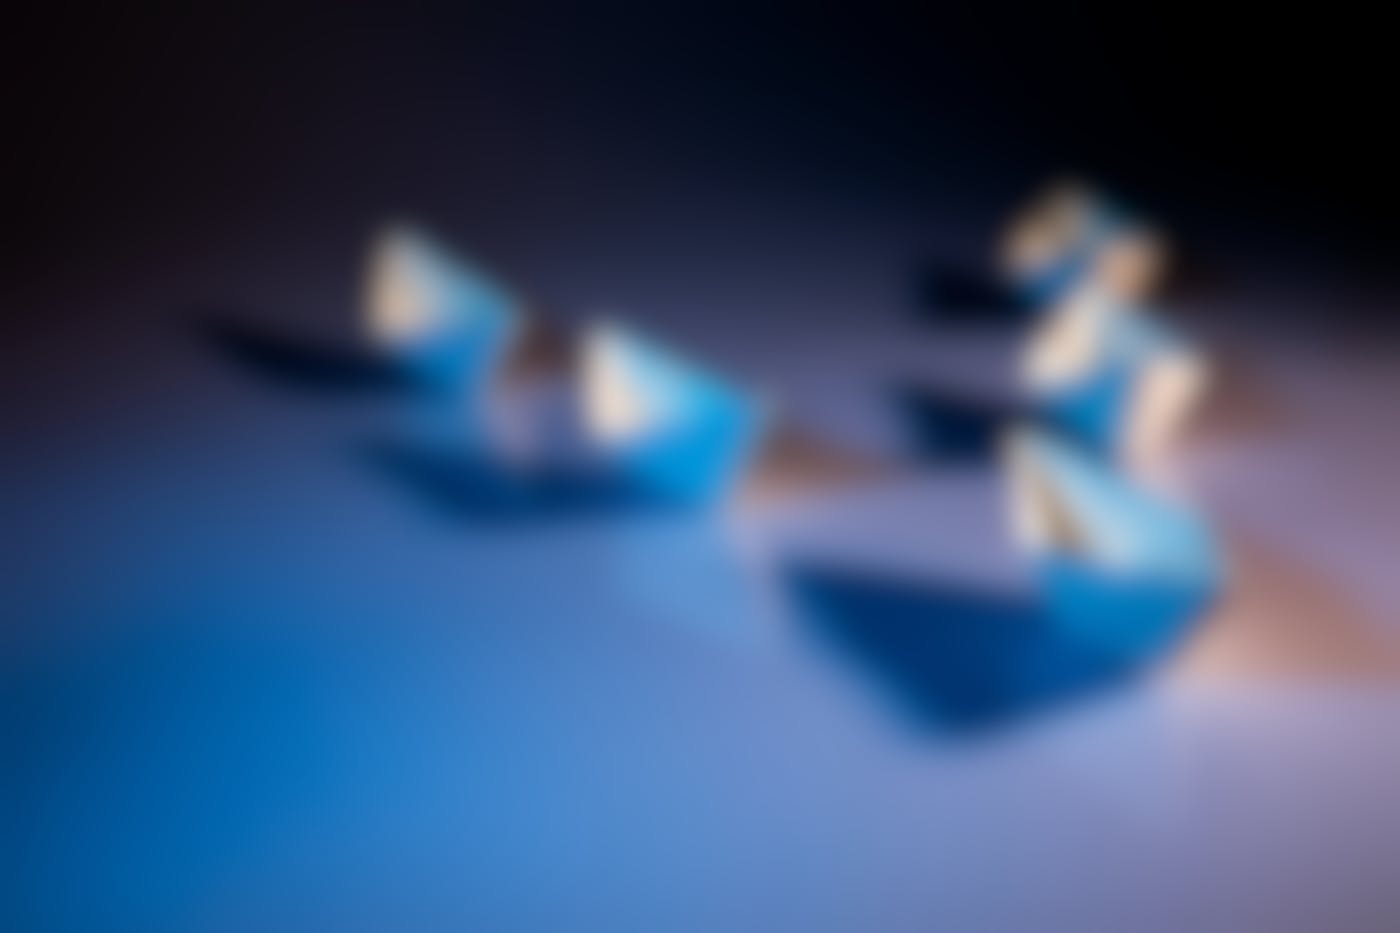 Five blue paper boats